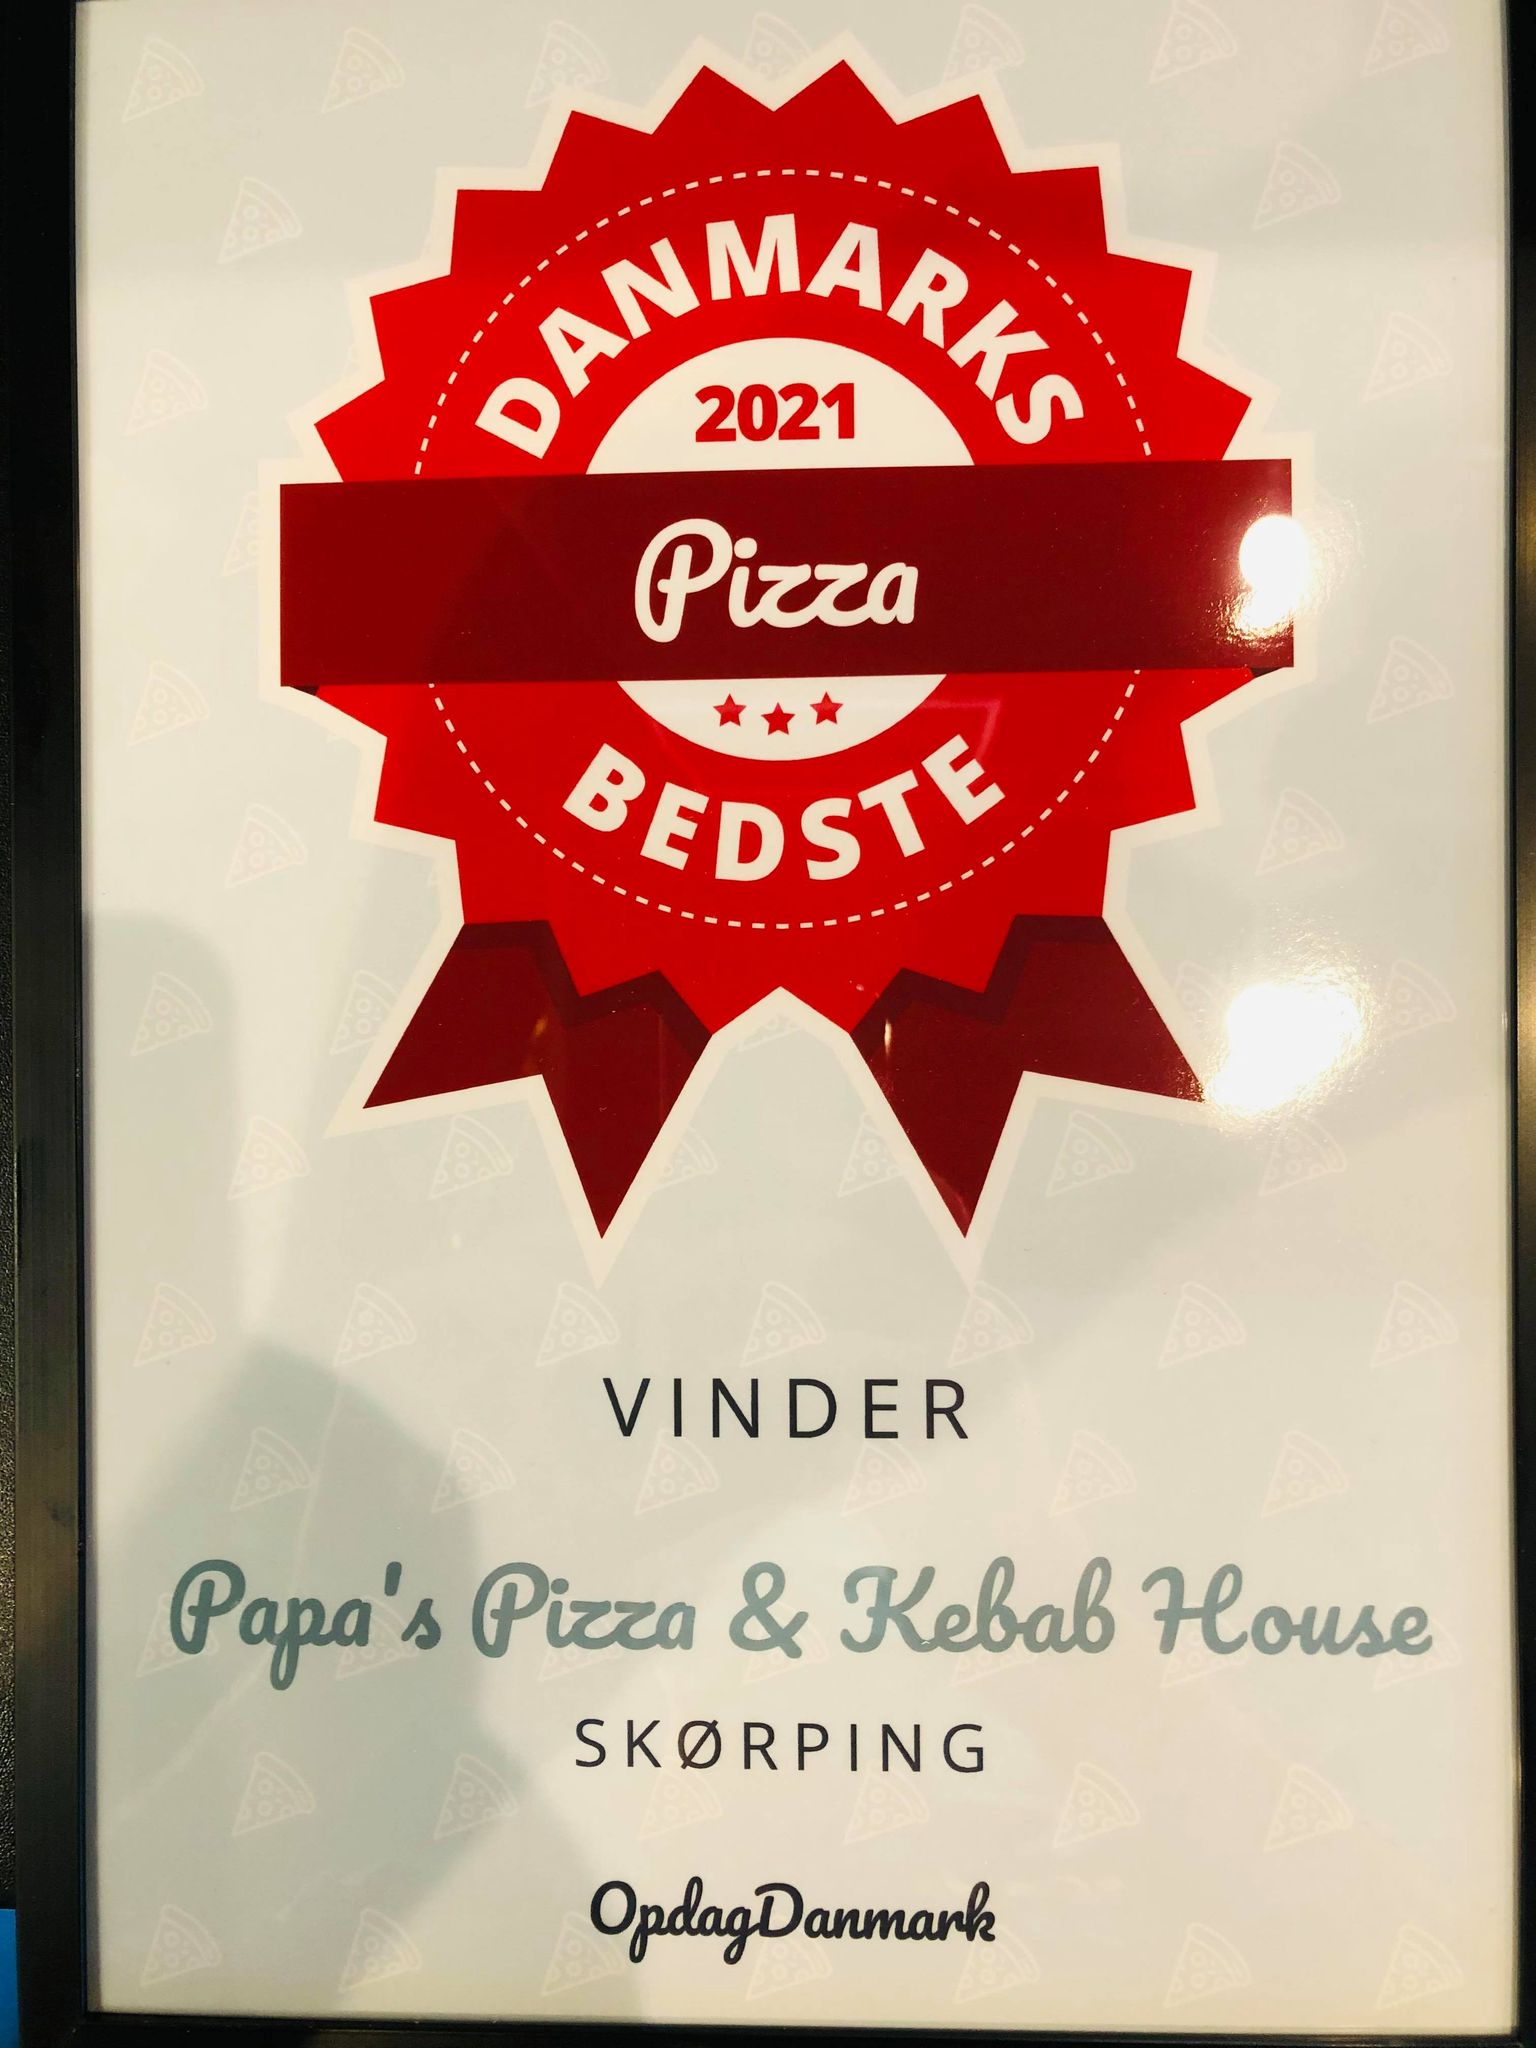 bedste pizza danmark diplom